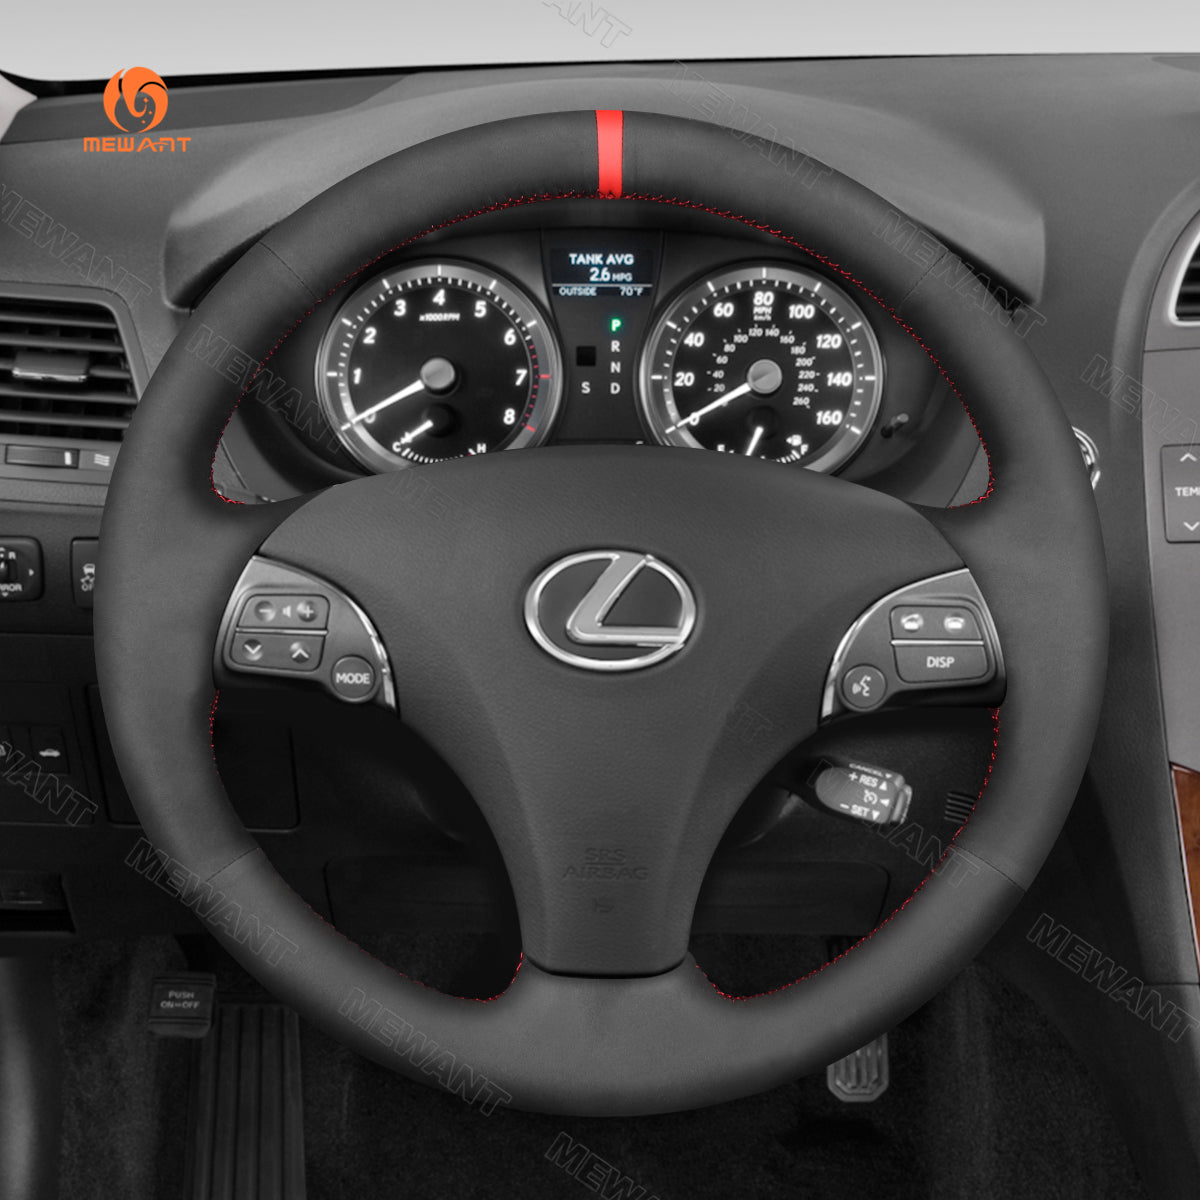 MEWANT Hand Stitch Black Suede Car Steering Wheel Cover for Lexus ES240 ES250 ES300 ES350 2007-2012 / GS350 GS450h GS460 2009 2010